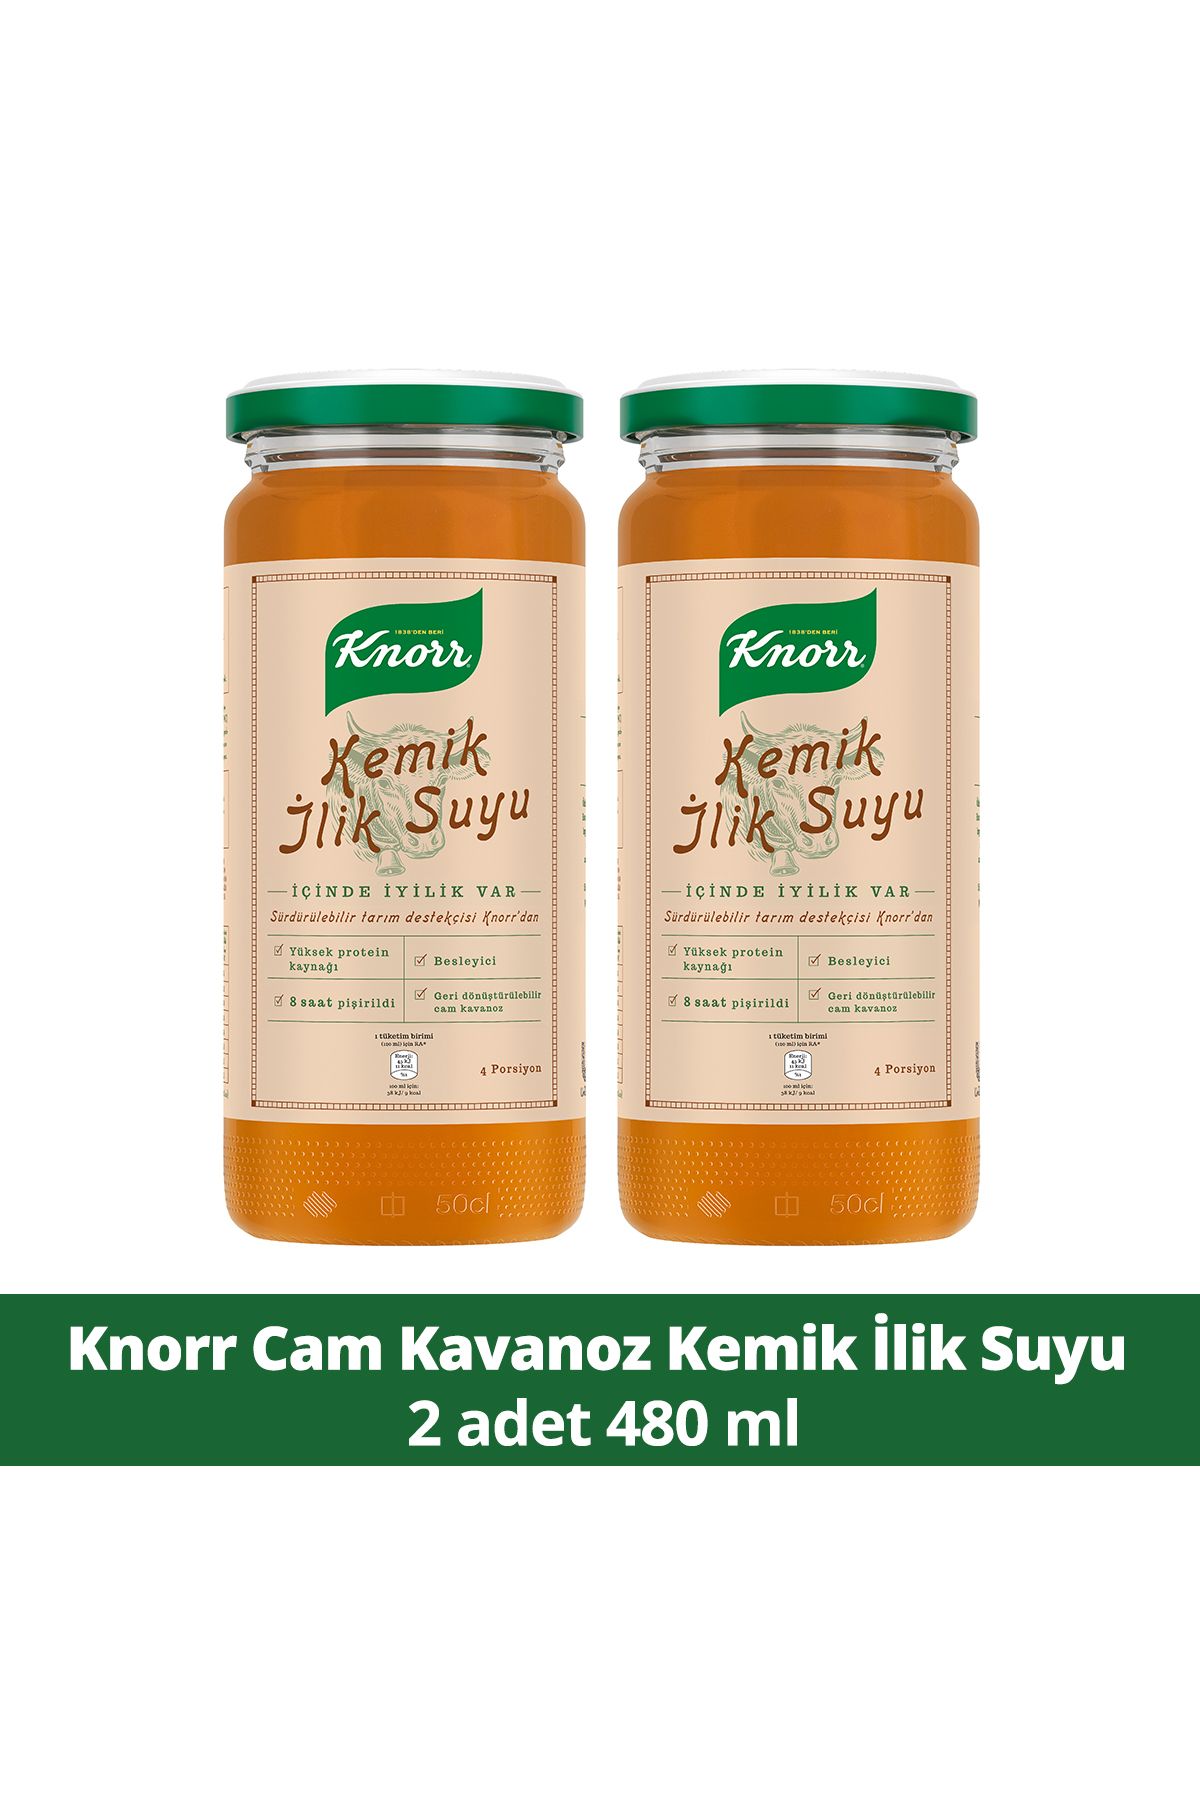 Knorr Cam Kavanoz Kemik Ilik Suyu 480 ml